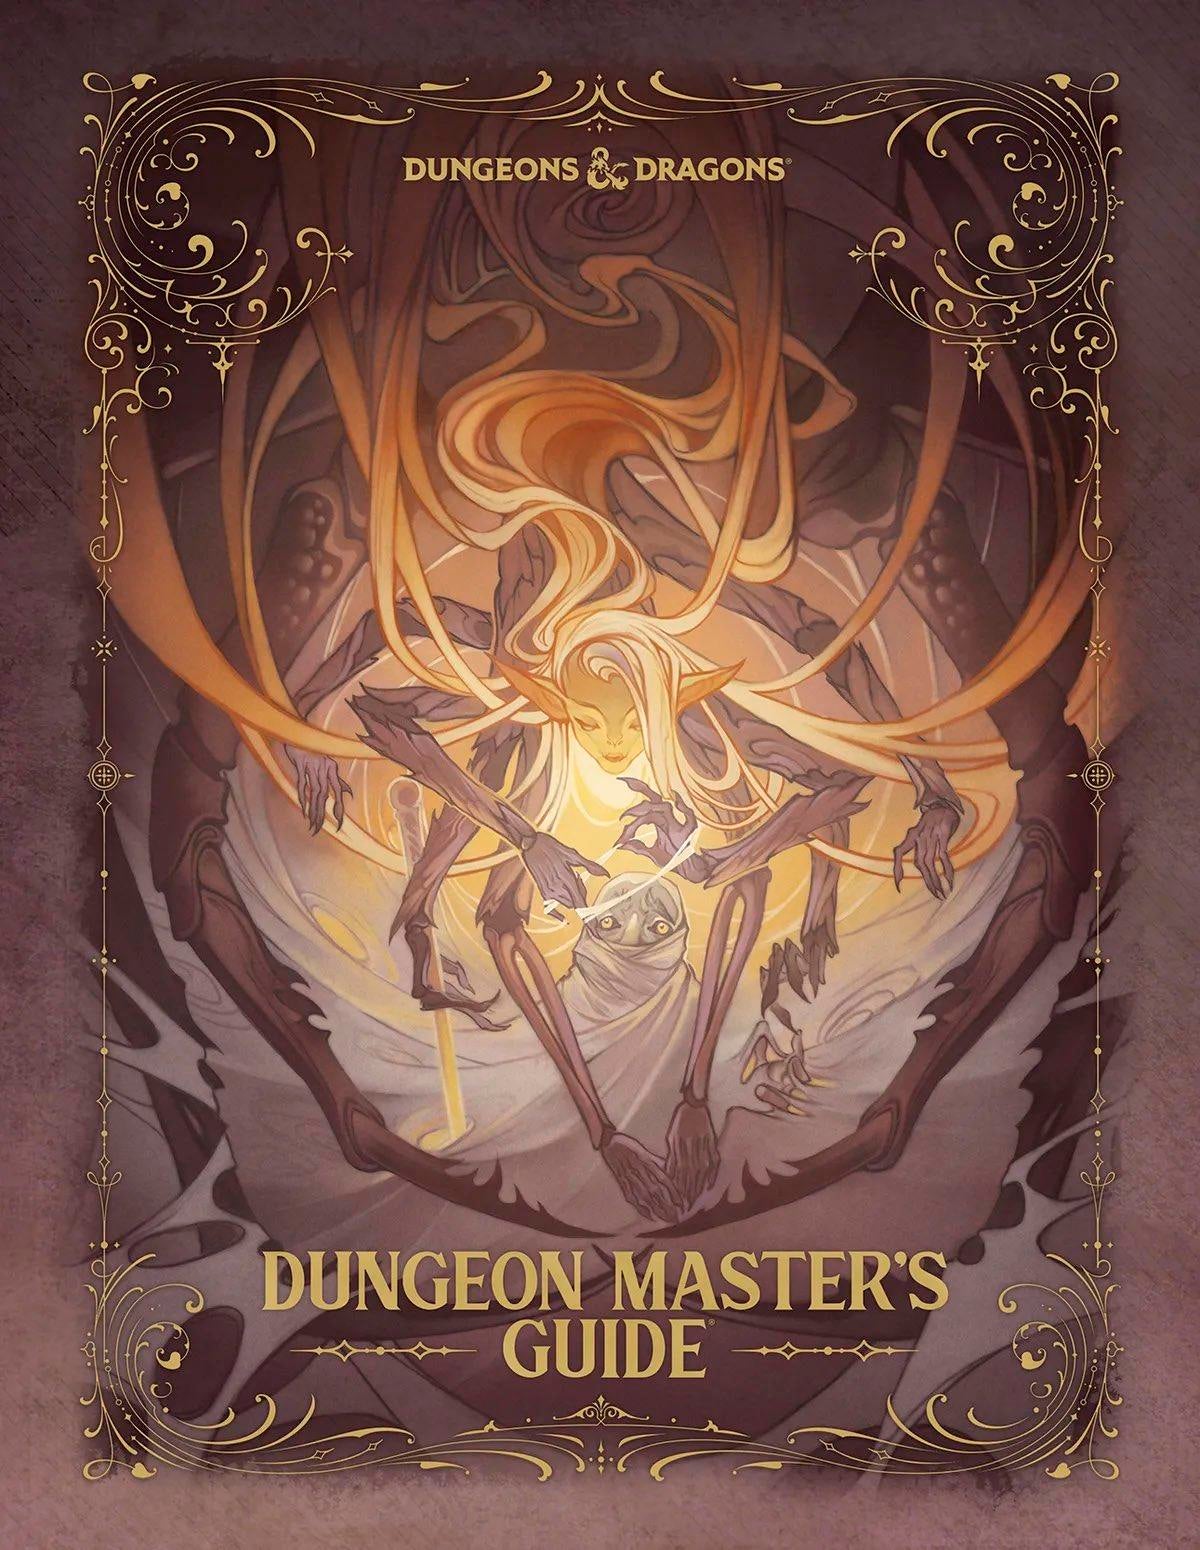 Dungeons & Dragons представляет альтернативную обложку руководства Dungeon Master's Guide